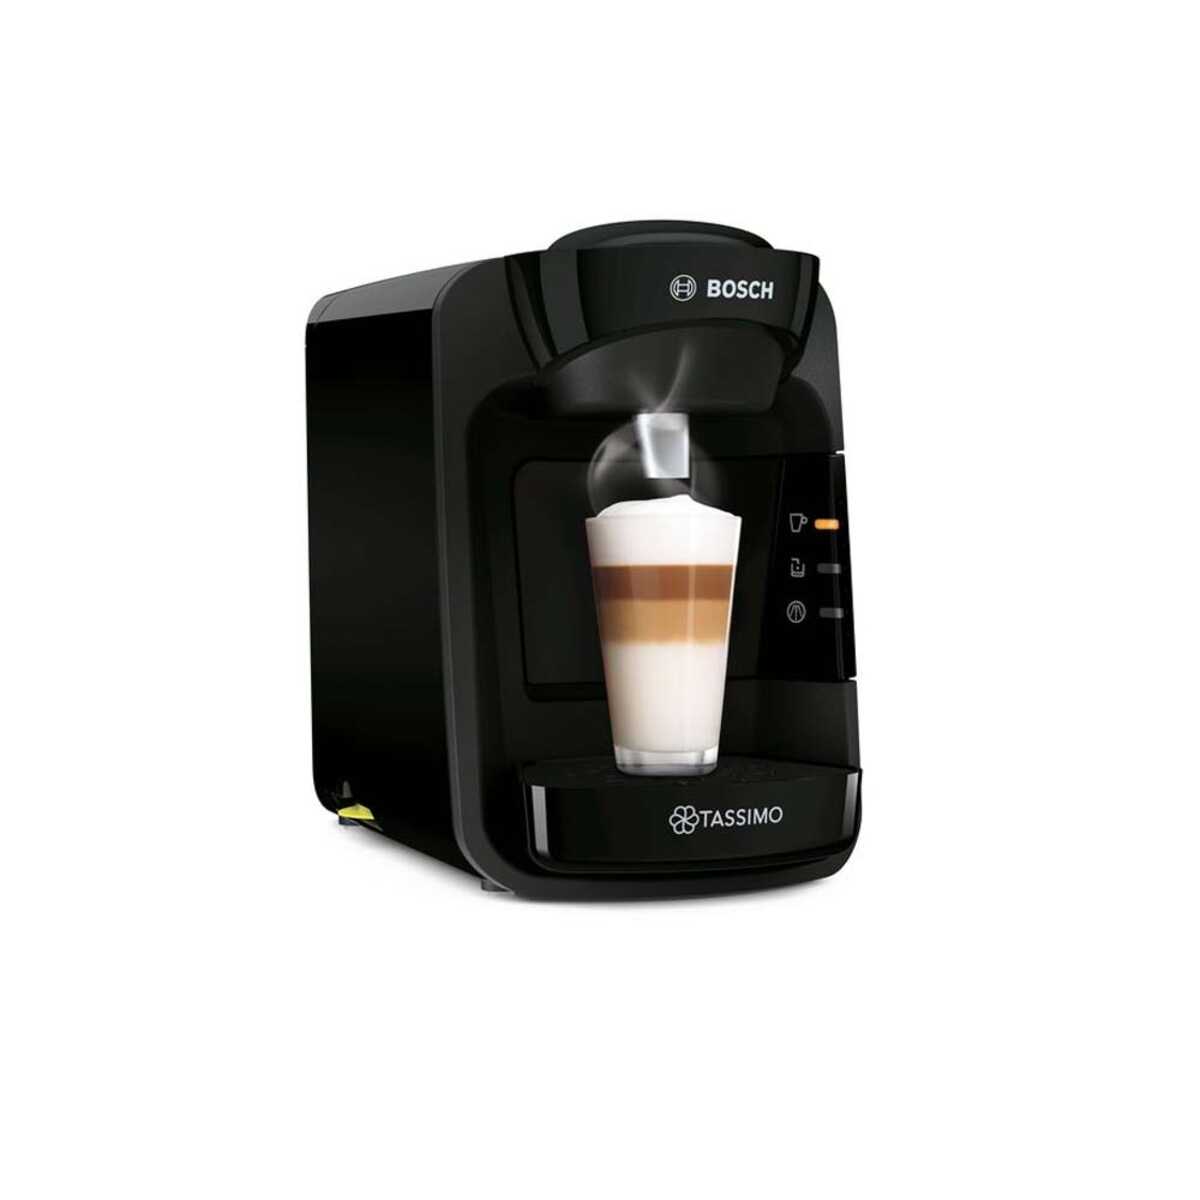 Tassimo Bosch Coffee Machine TAS3102GB